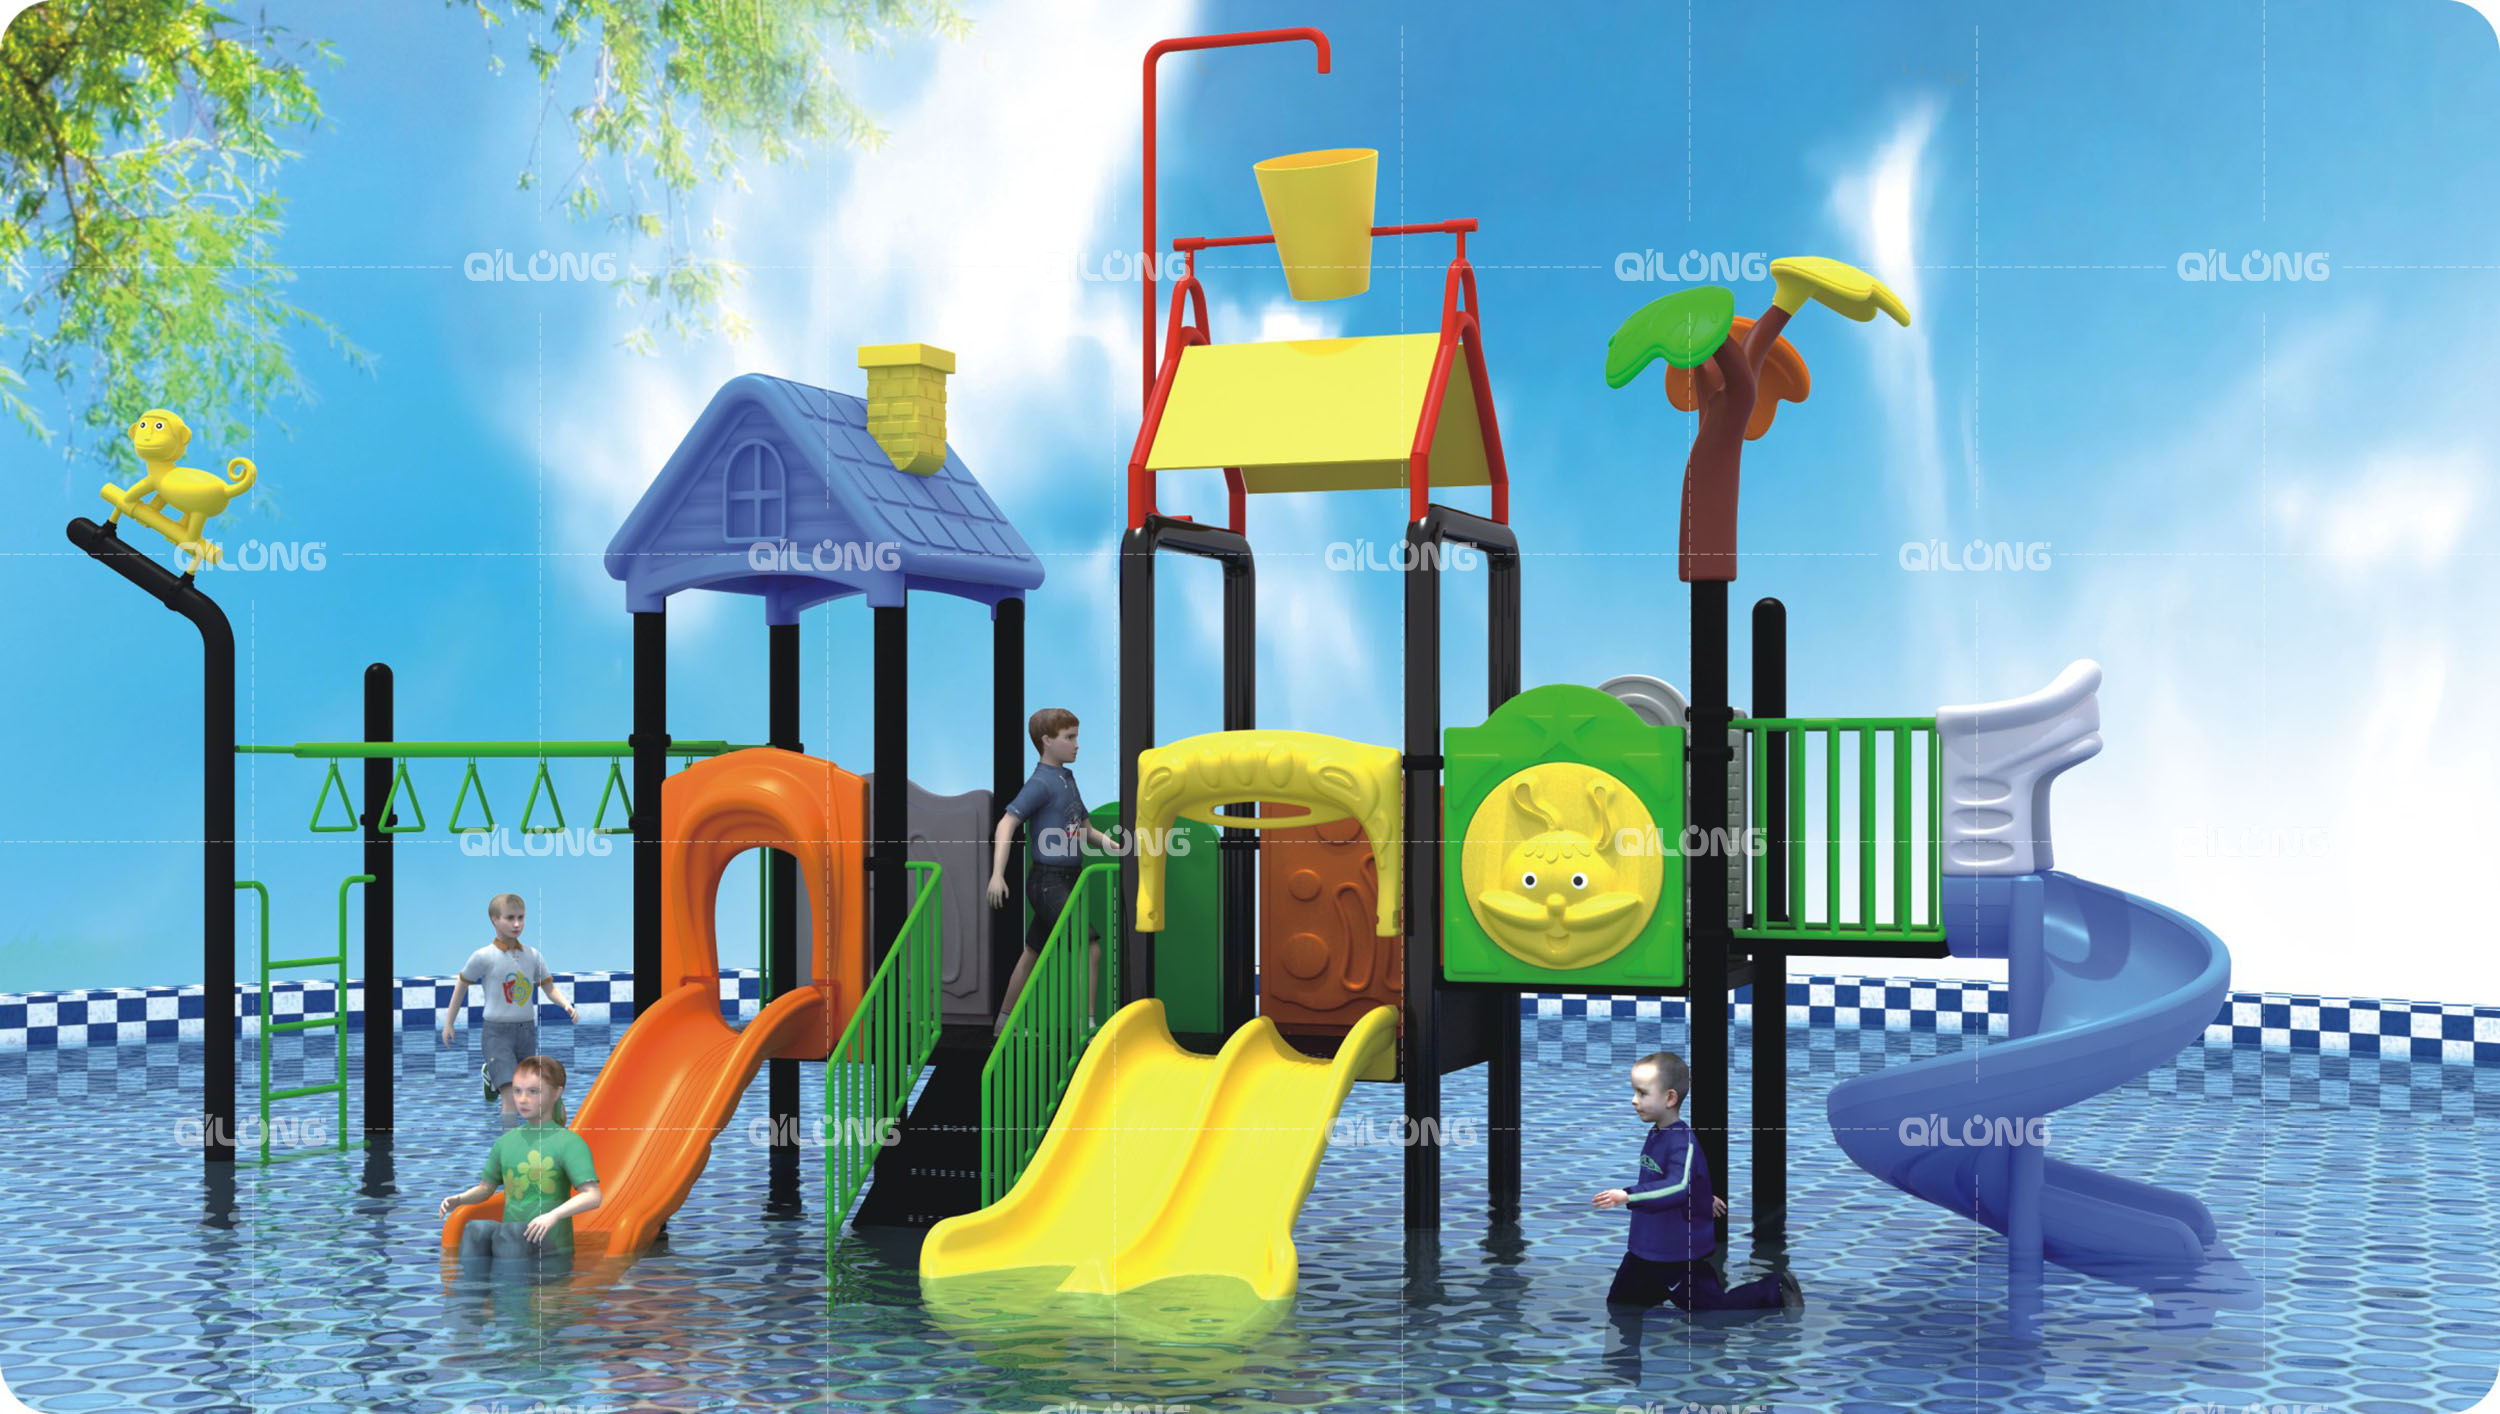 Outdoor playground equipment